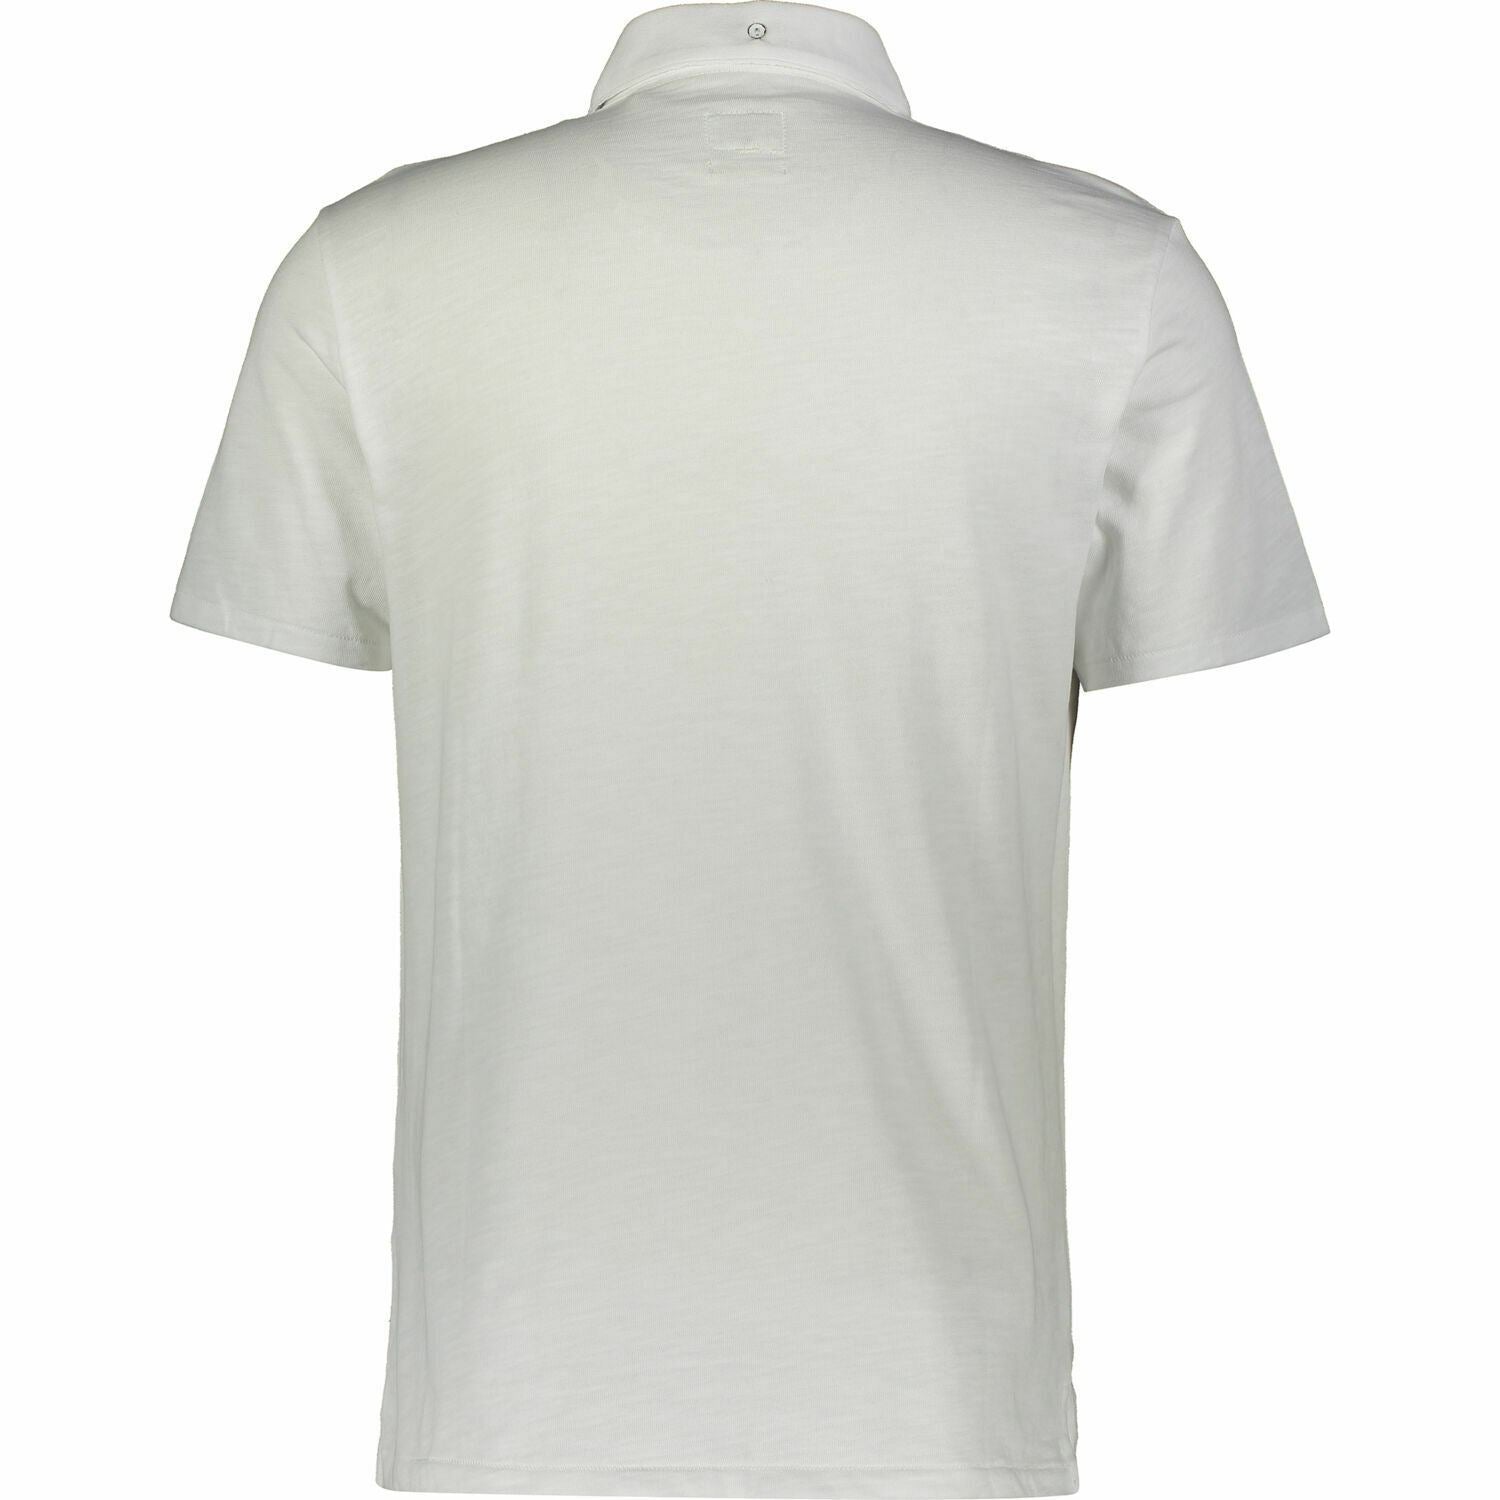 RAG & BONE Men's White Classic Polo Shirt, size SMALL